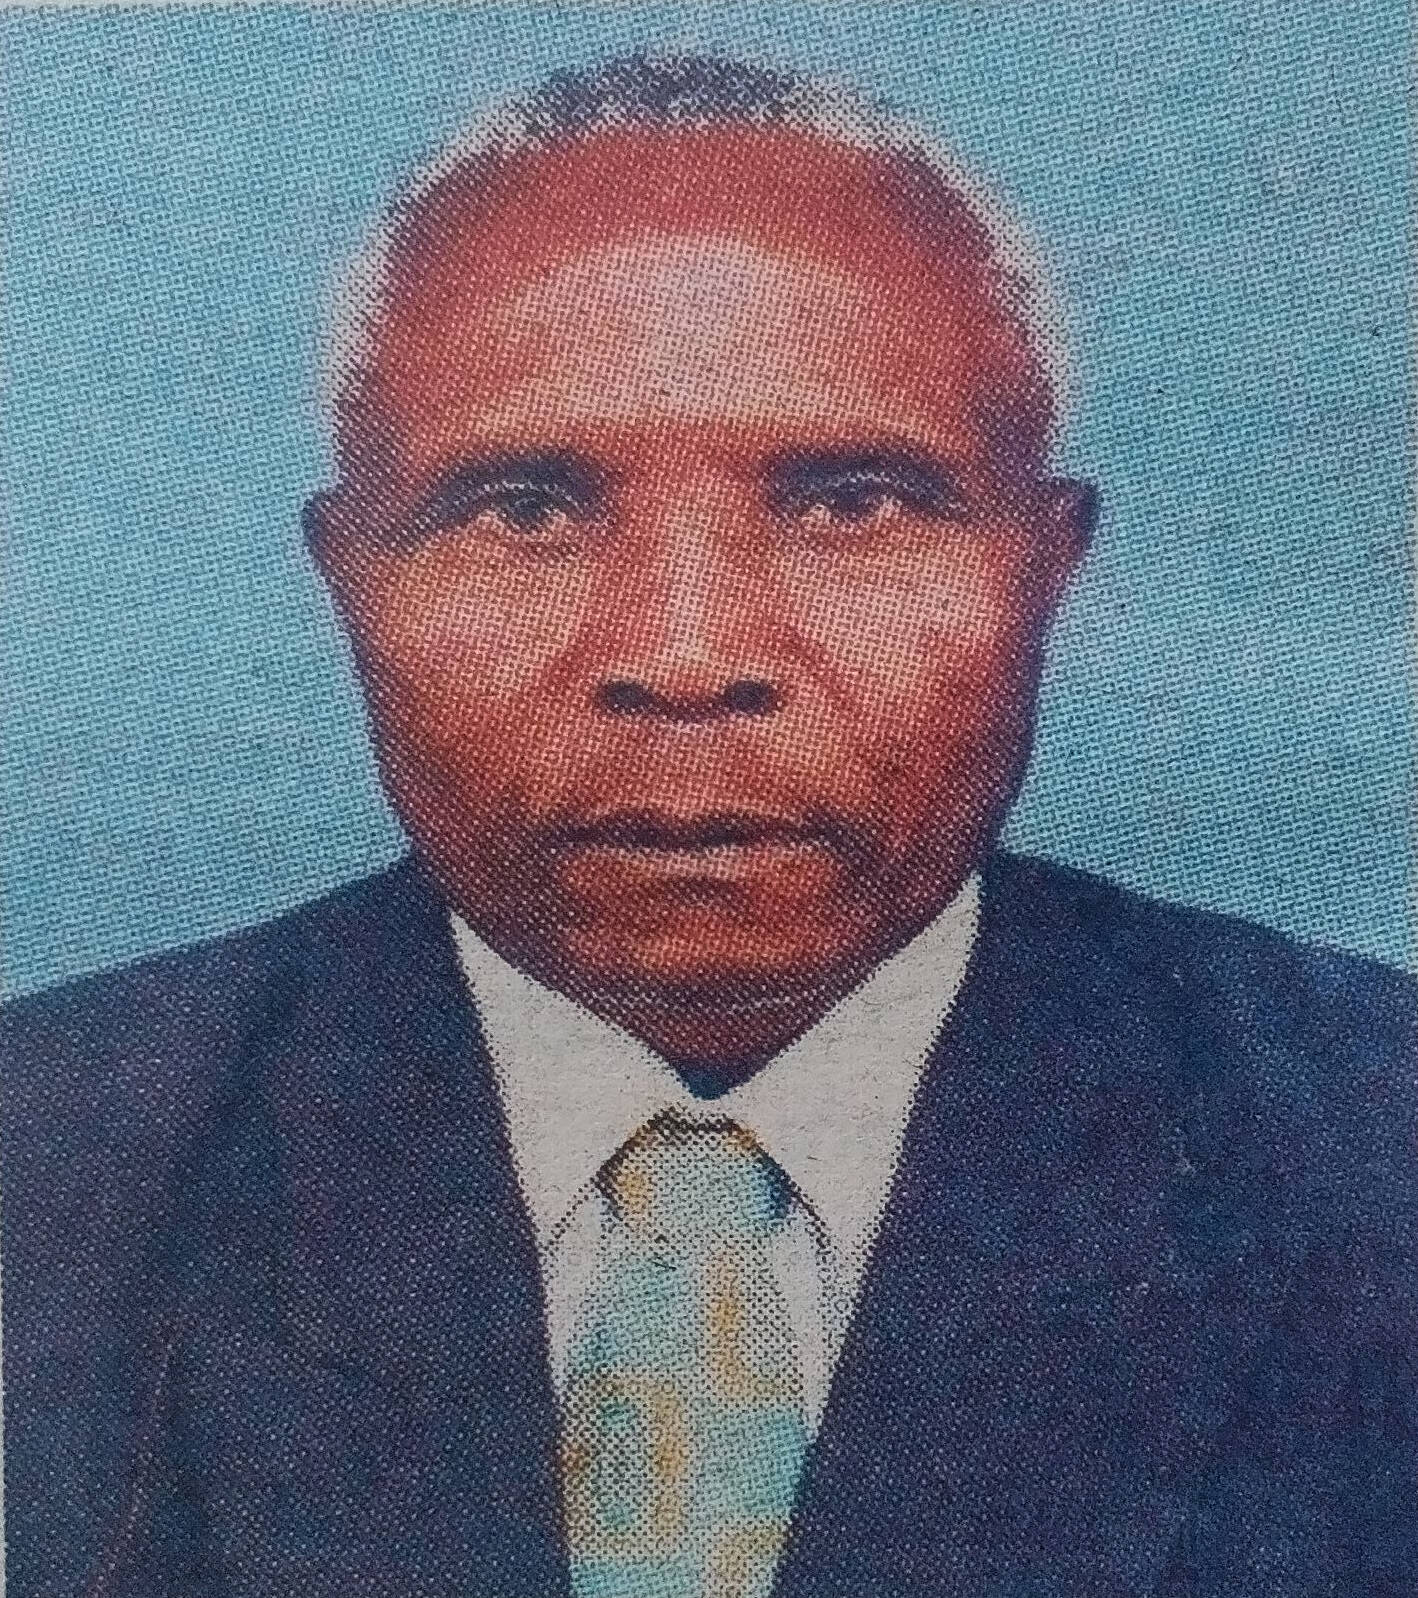 Obituary Image of Peter Githinji Rugo "Babu" 24th April,2016